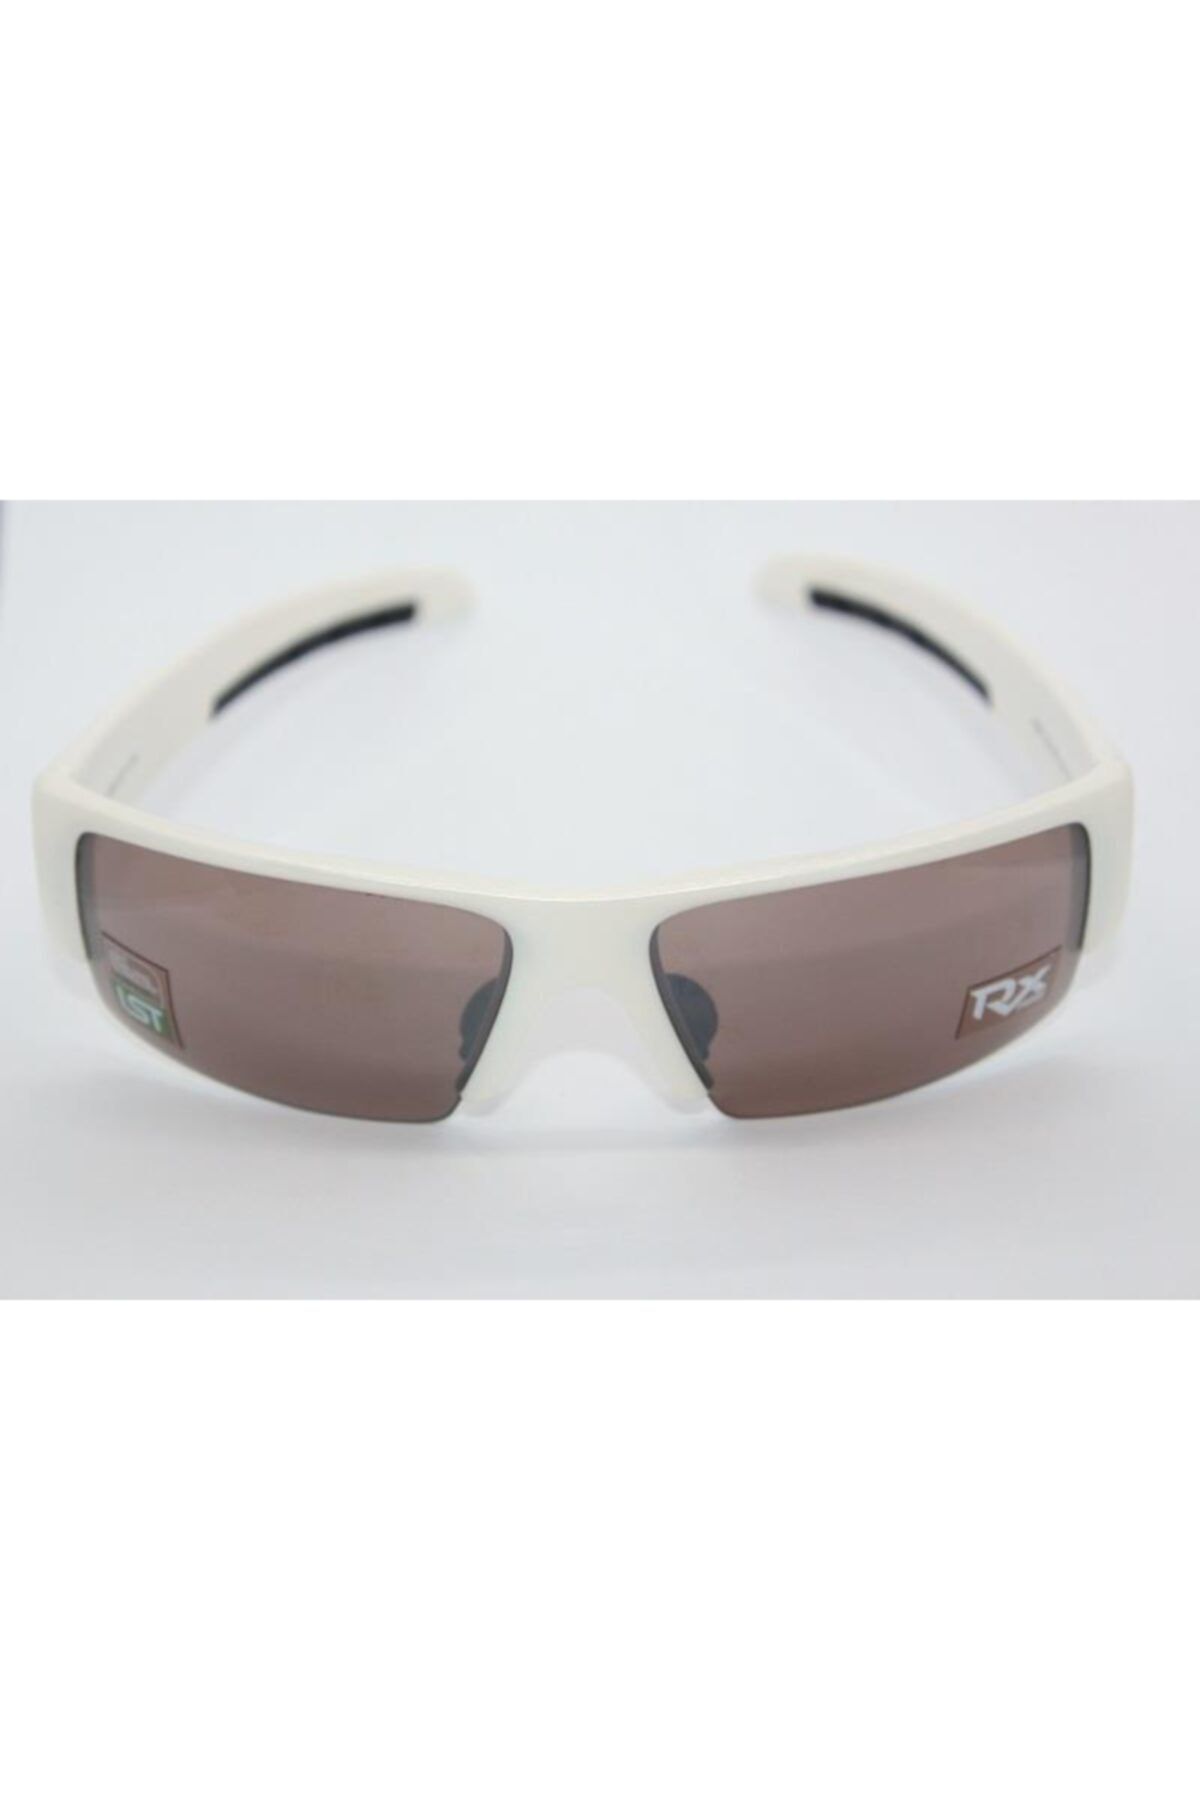 adidas Unisex Güneş Gözlüğü M.401 61